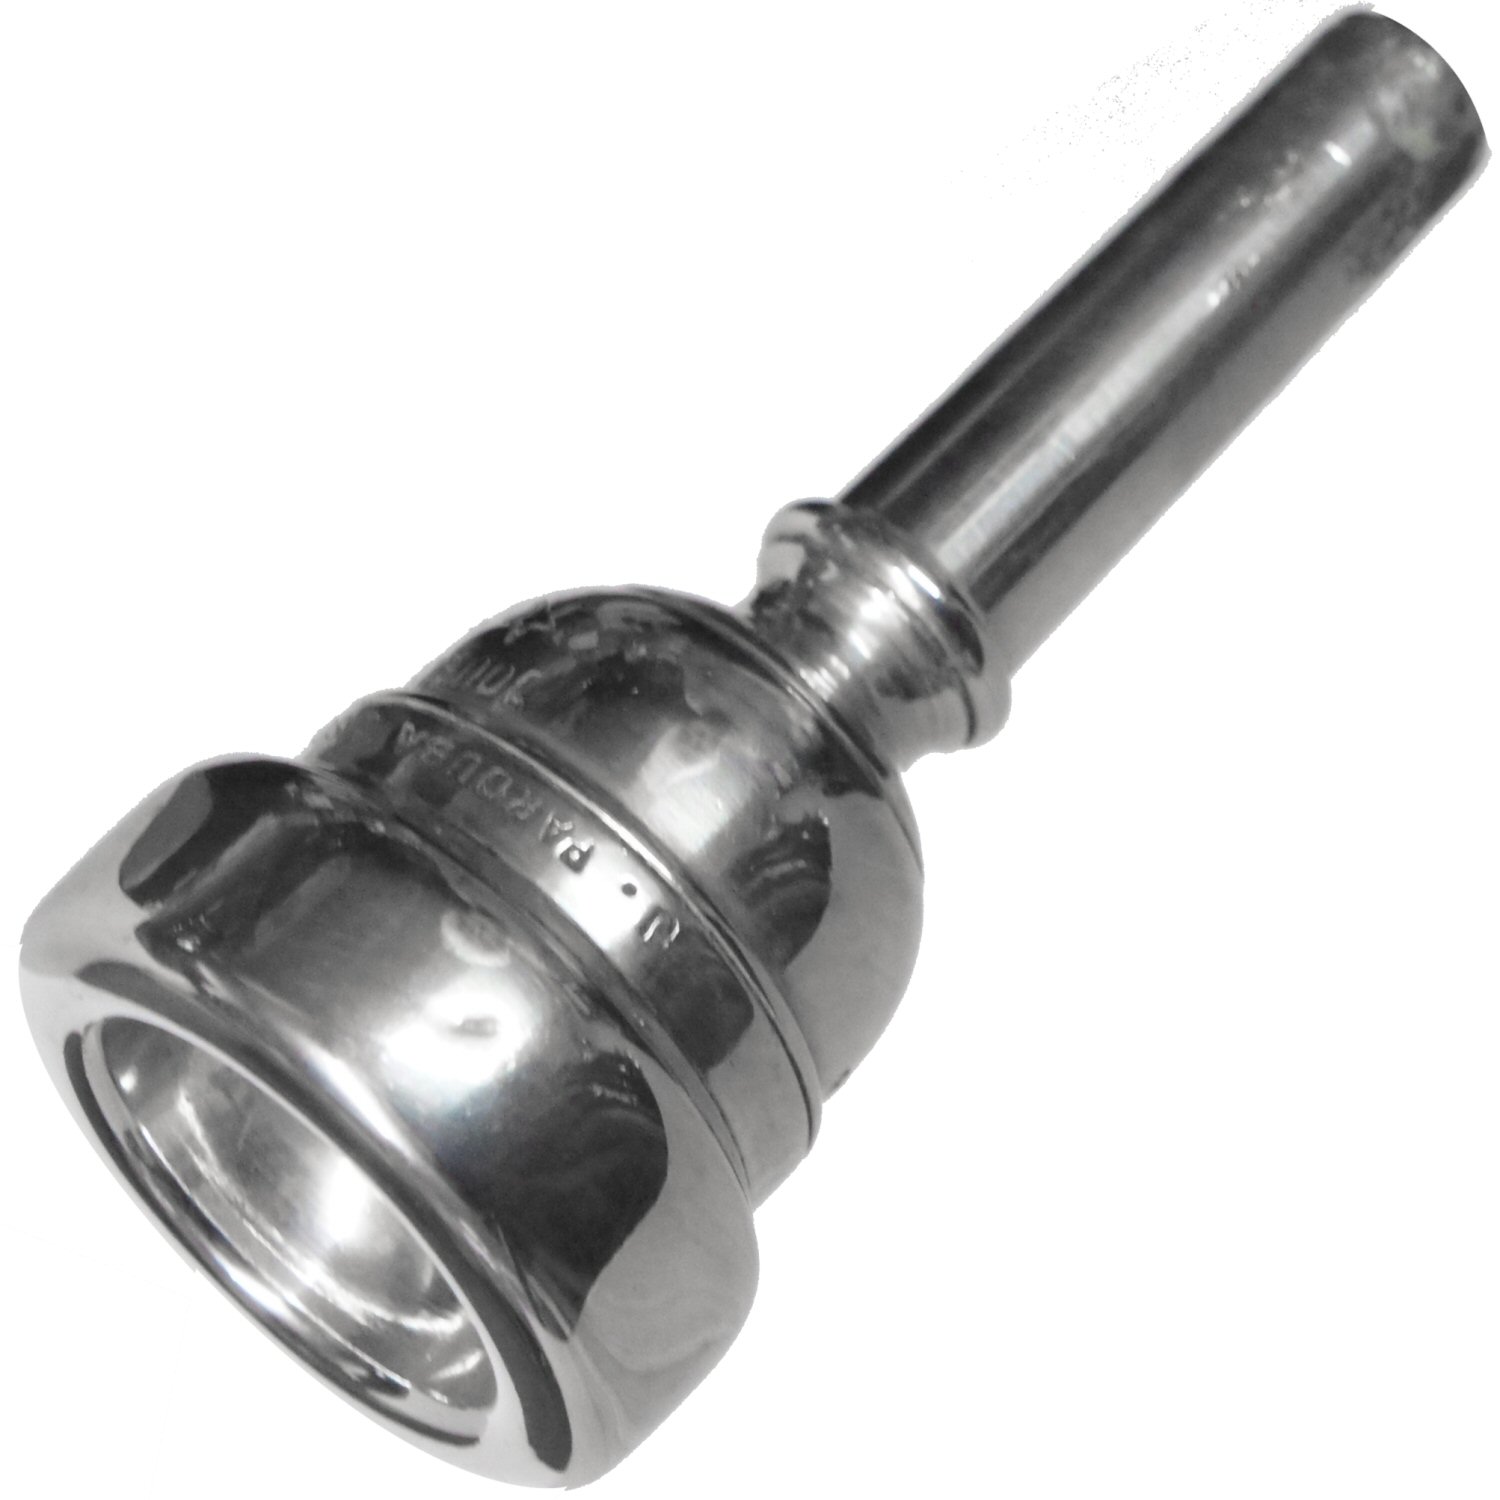 Second hand small shank trombone mouthpiece – Parduba 3 Double Cup